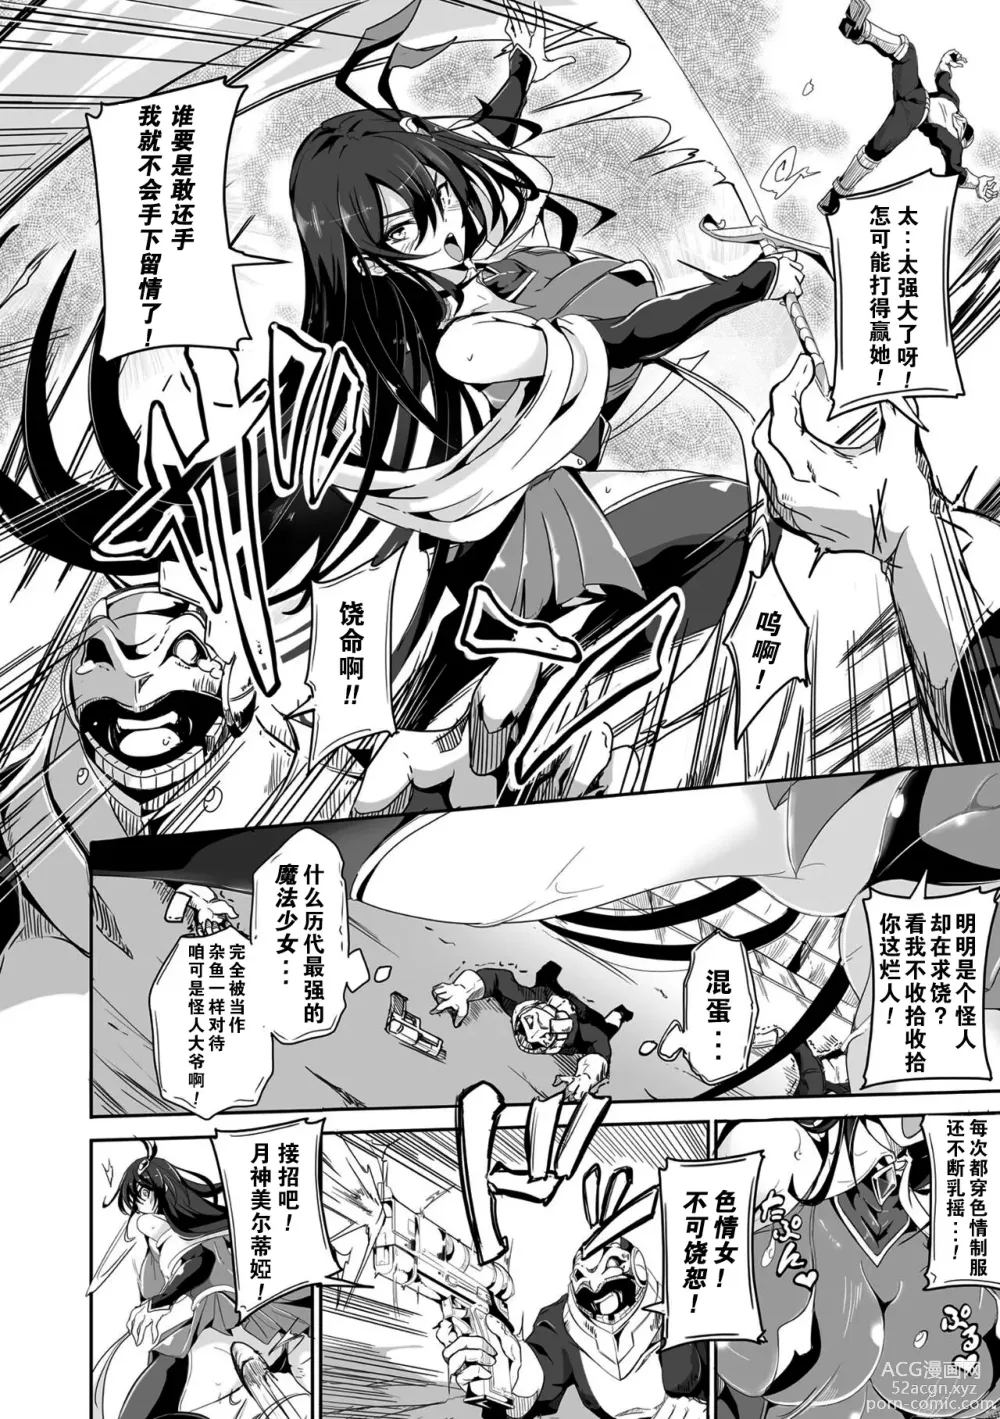 Page 2 of manga Defeating Magical Girl Luna Meltia-Operation to change common sense-